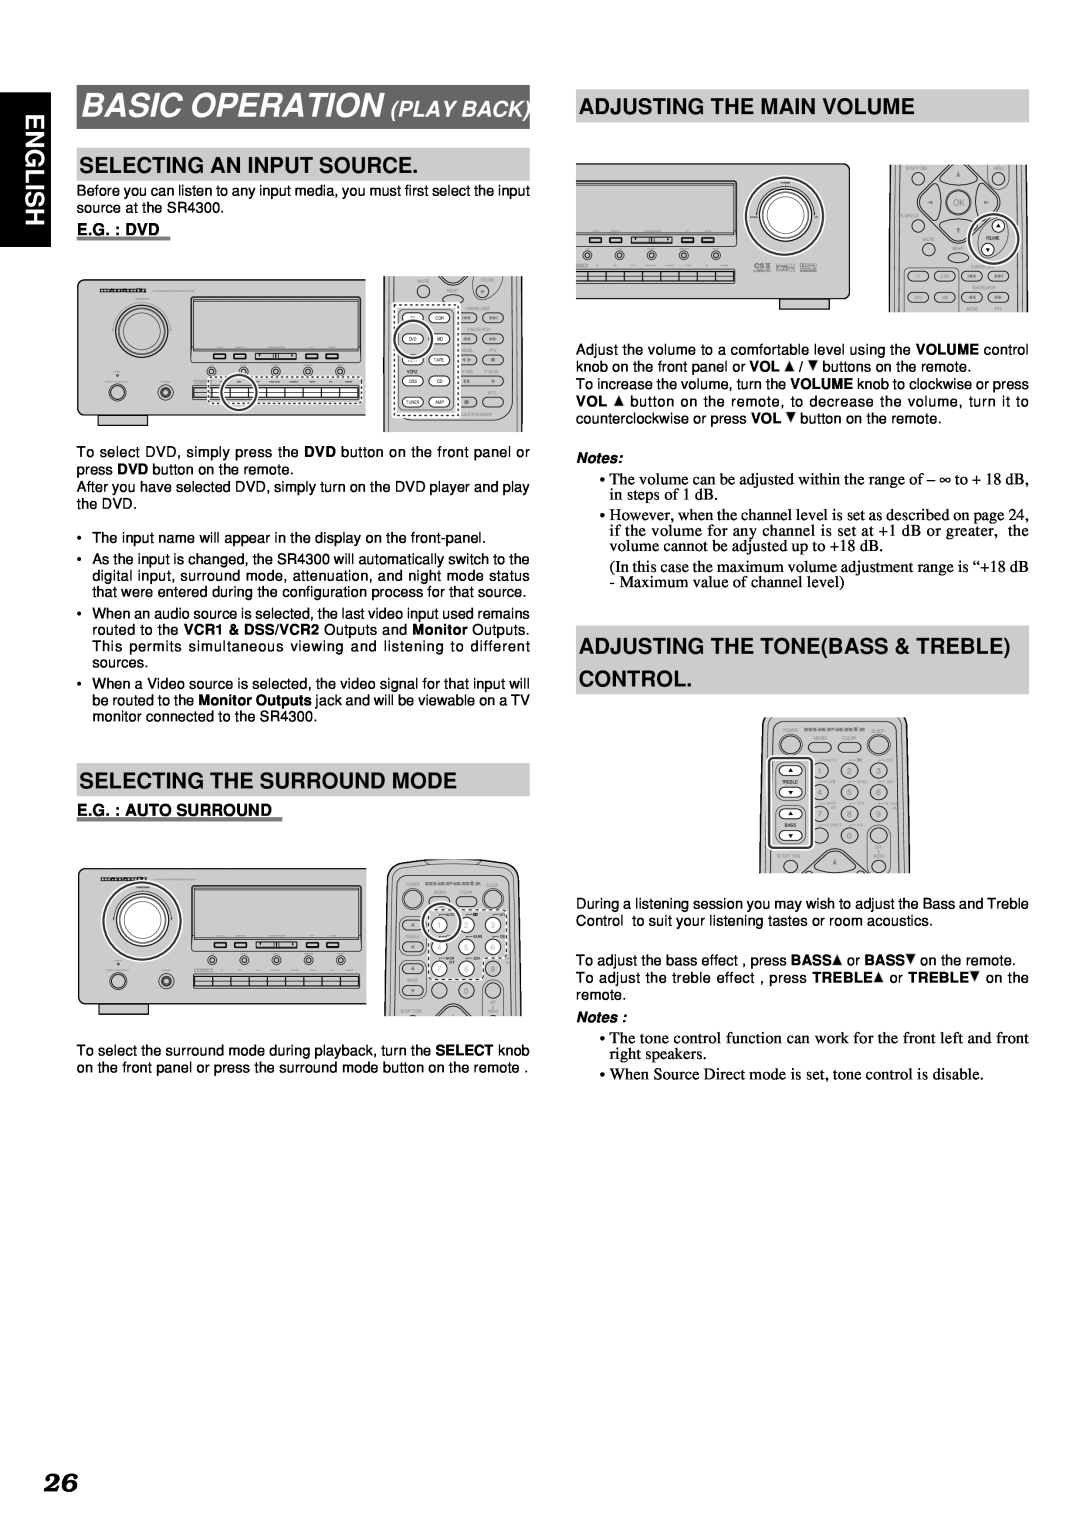 Marantz SR4300 manual Basic Operation Play Back, English, Selecting An Input Source, Selecting The Surround Mode, E.G. Dvd 